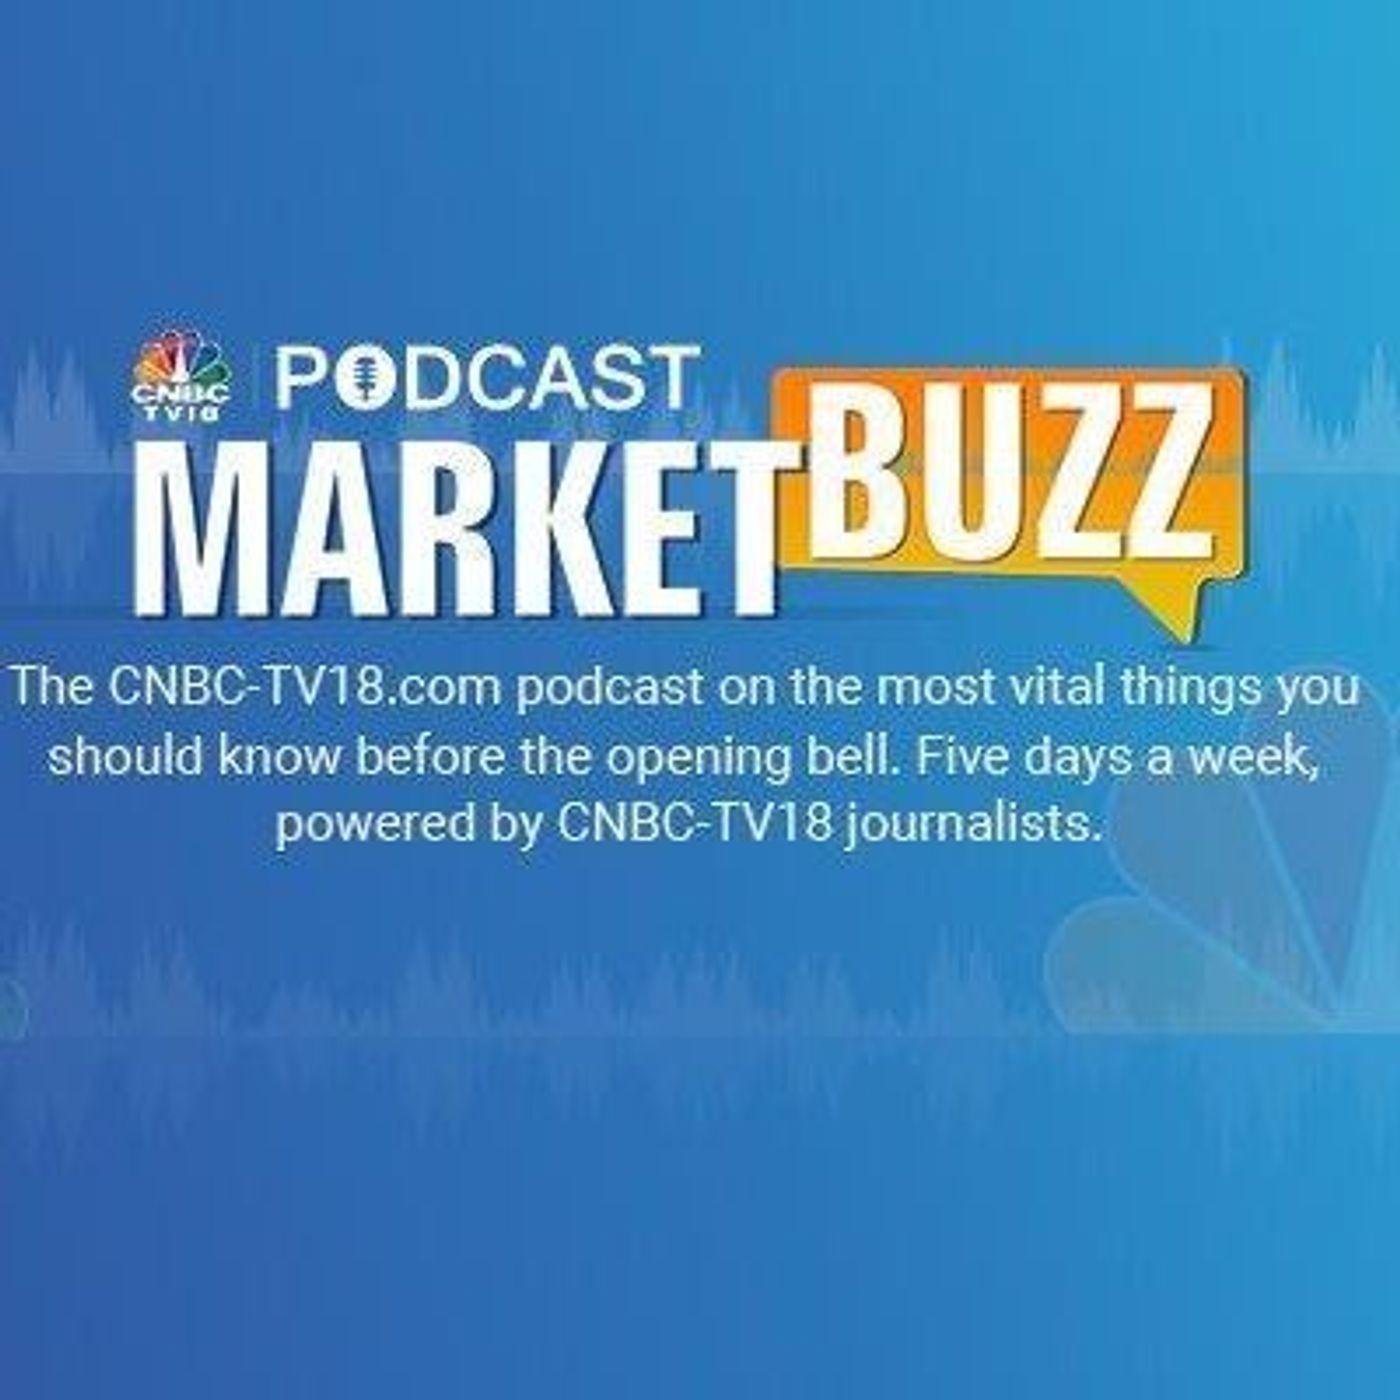 1227: Marketbuzz Podcast with Kanishka Sarkar: Nifty 50 to open lower, all eyes on RBI policy, US jobs data